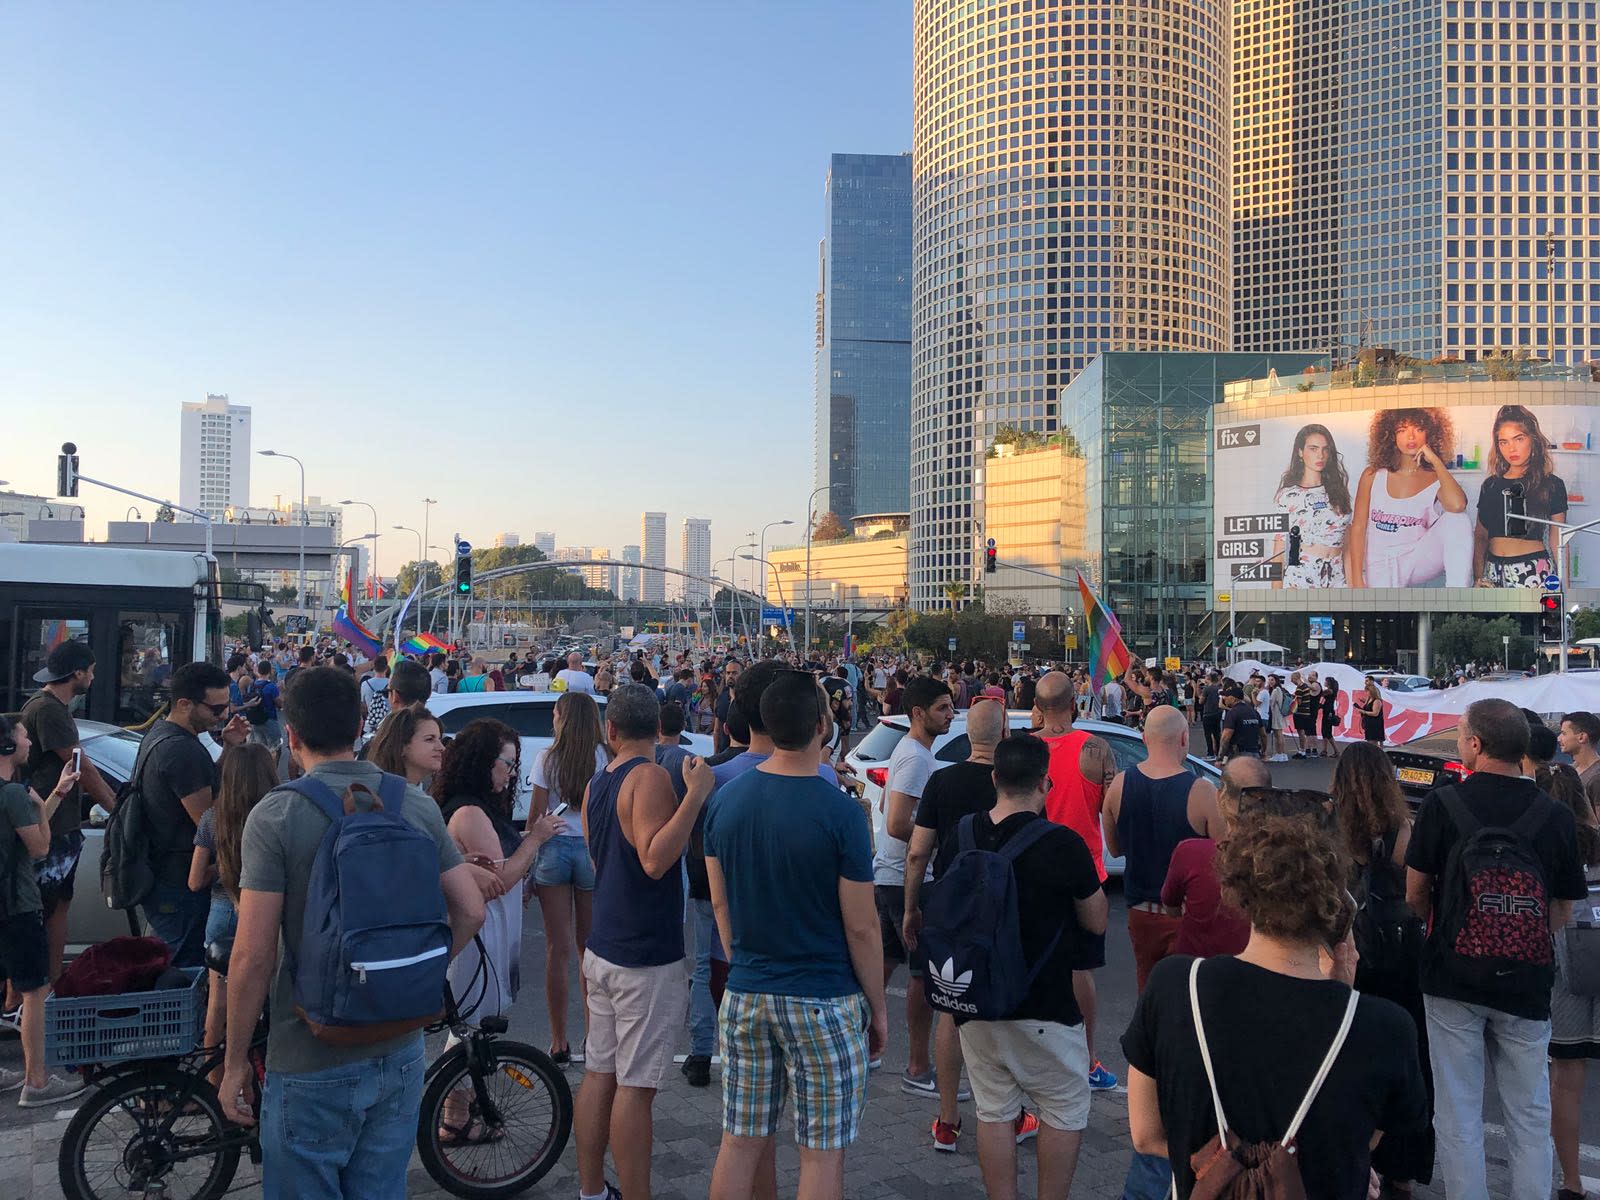 Hundreds of members of LGBT community protest surrogacy law in Tel Aviv (Courtesy)